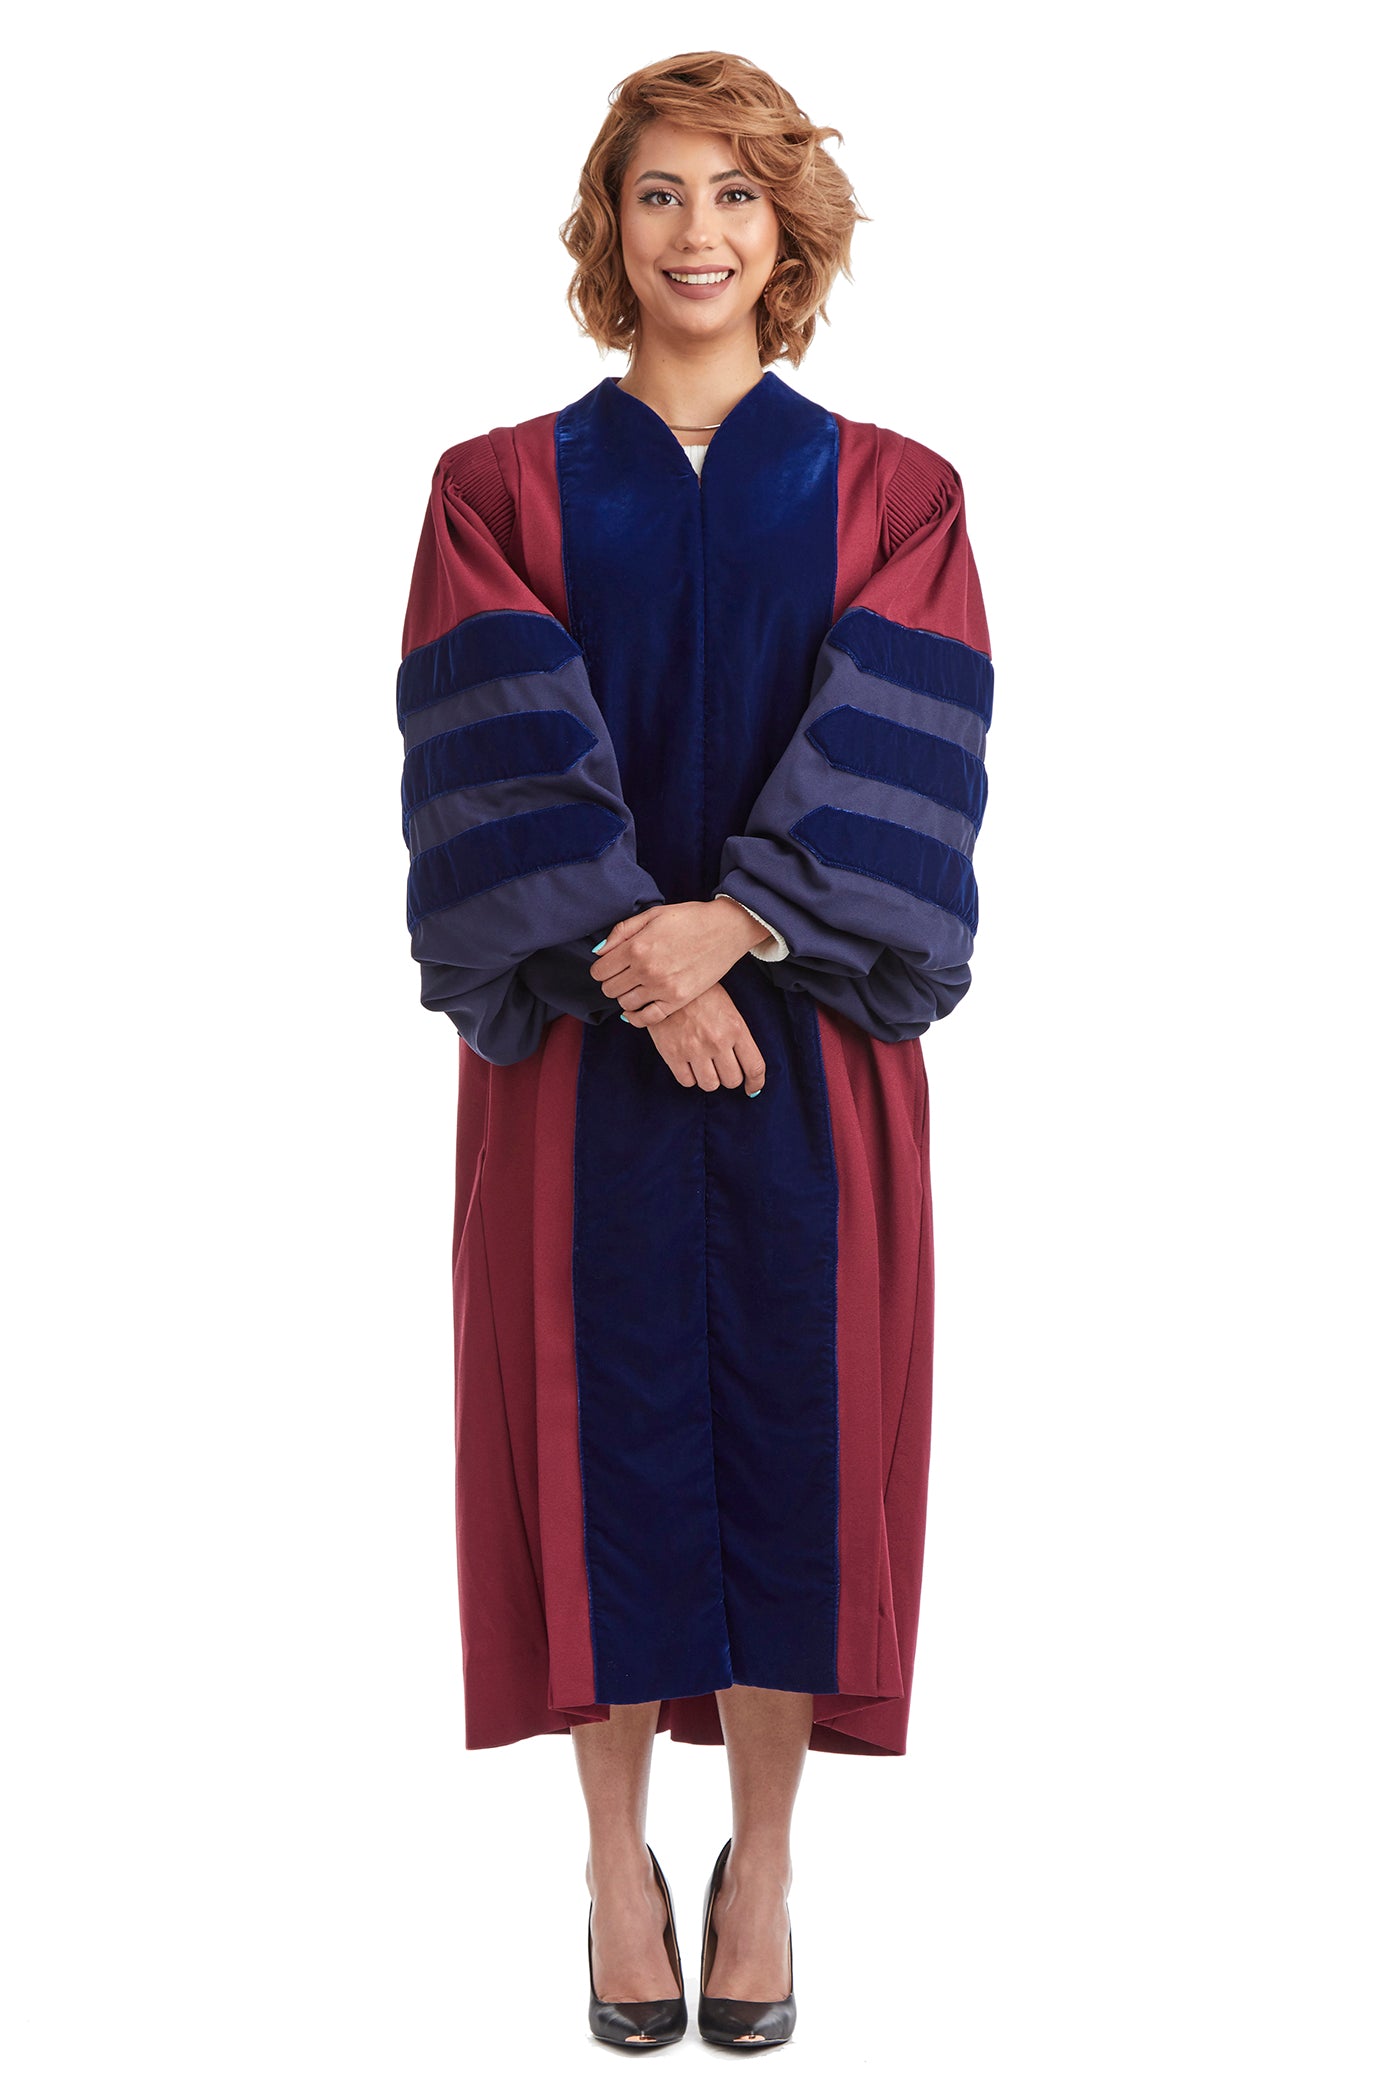 University of Pennsylvania PhD Gown